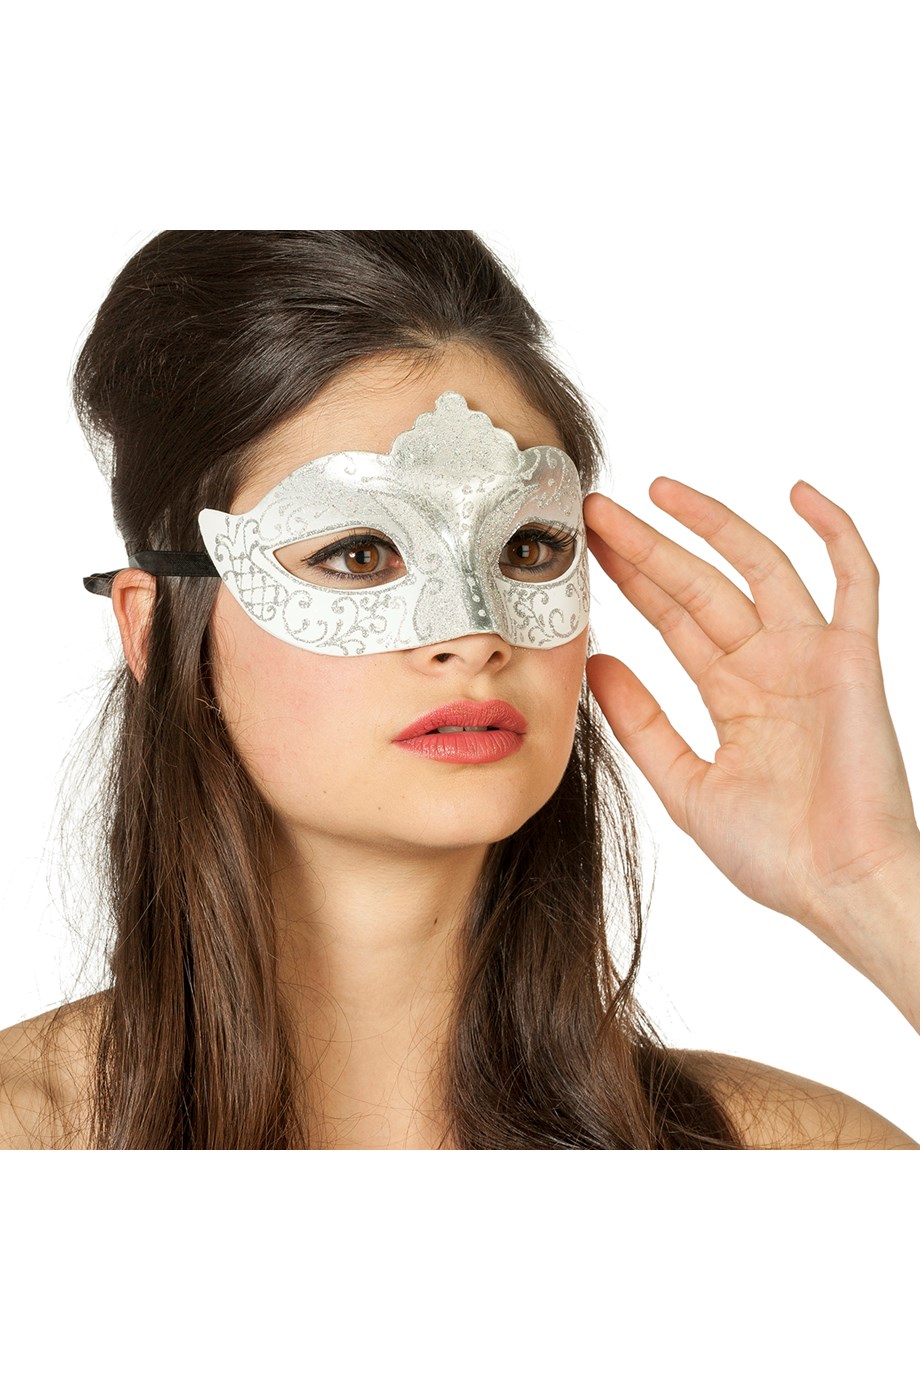 Venetiaans masker zilver glitter - .Willaert, verkleedkledij, carnaval kledij, carnaval outfit, feestkledij, masker, Venetiaanse maskers, oogmasker, loupe, Venetiaans bal, gemaskerd bal, bal masque, gemaskerd feest, Masquerade